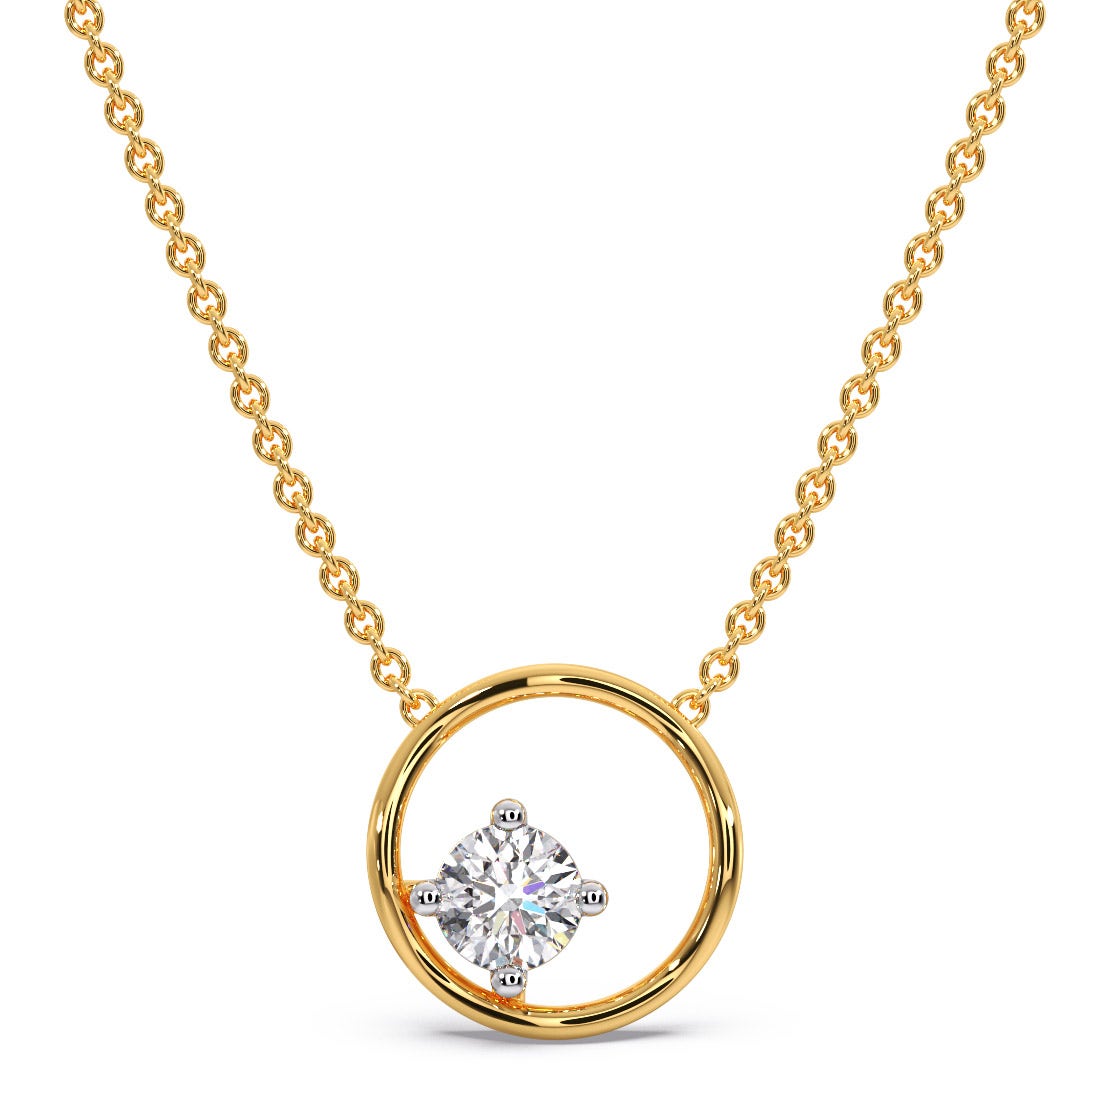 Ringlet Solitaire Diamond Pendant Necklace